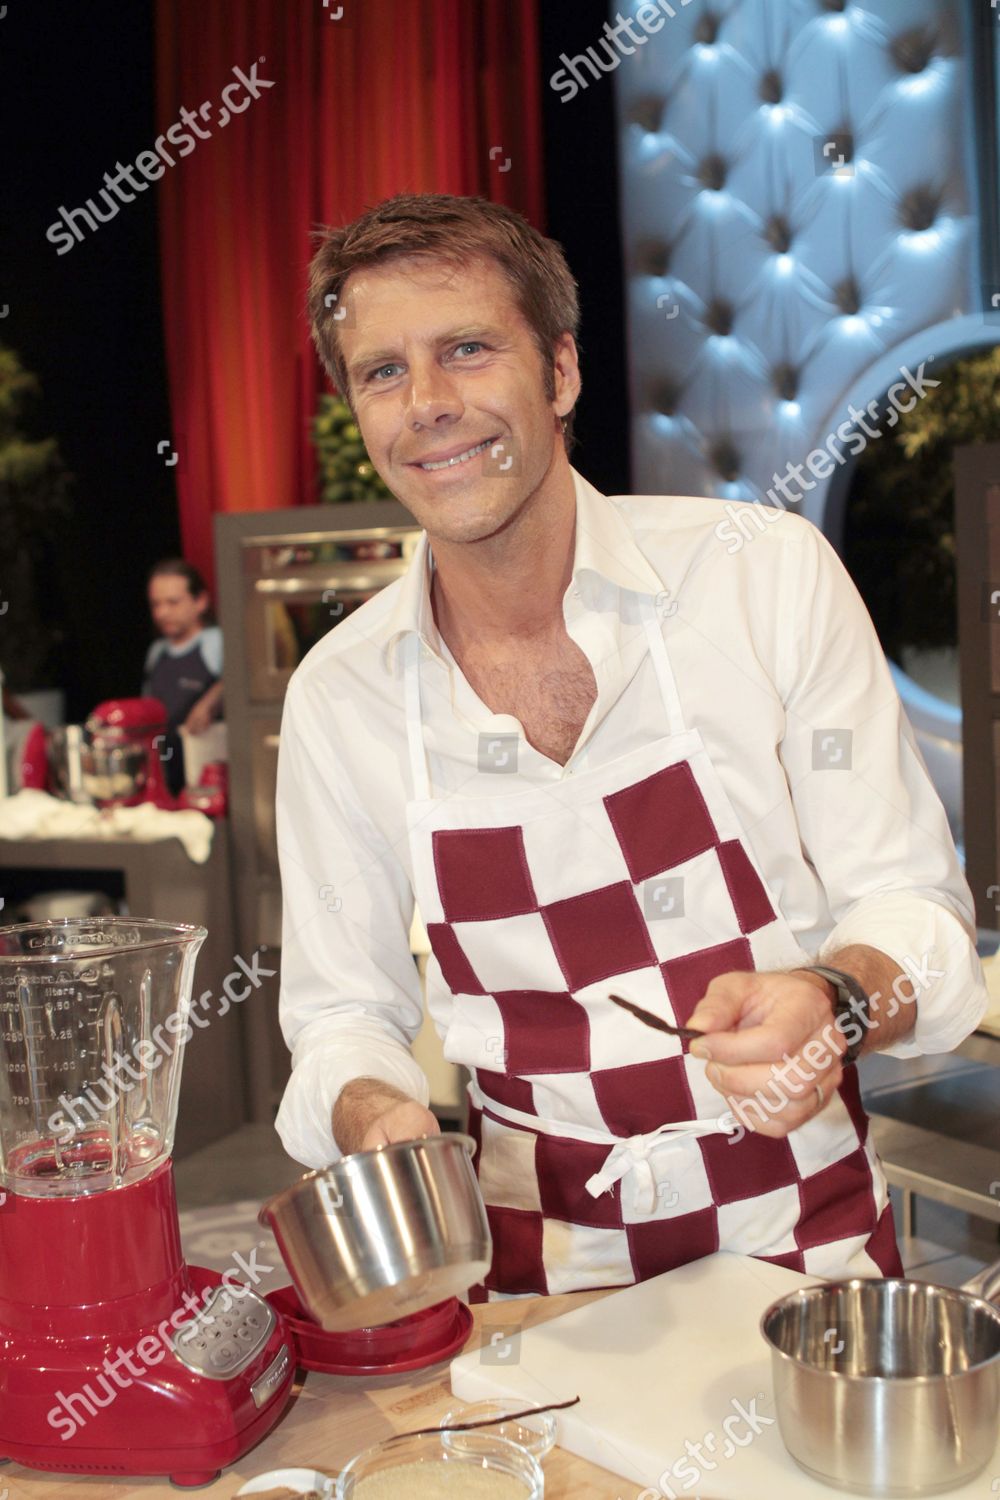 la-notte-degli-chef-tv-programme-milan-italy-shutterstock-editorial-1348414i.jpg